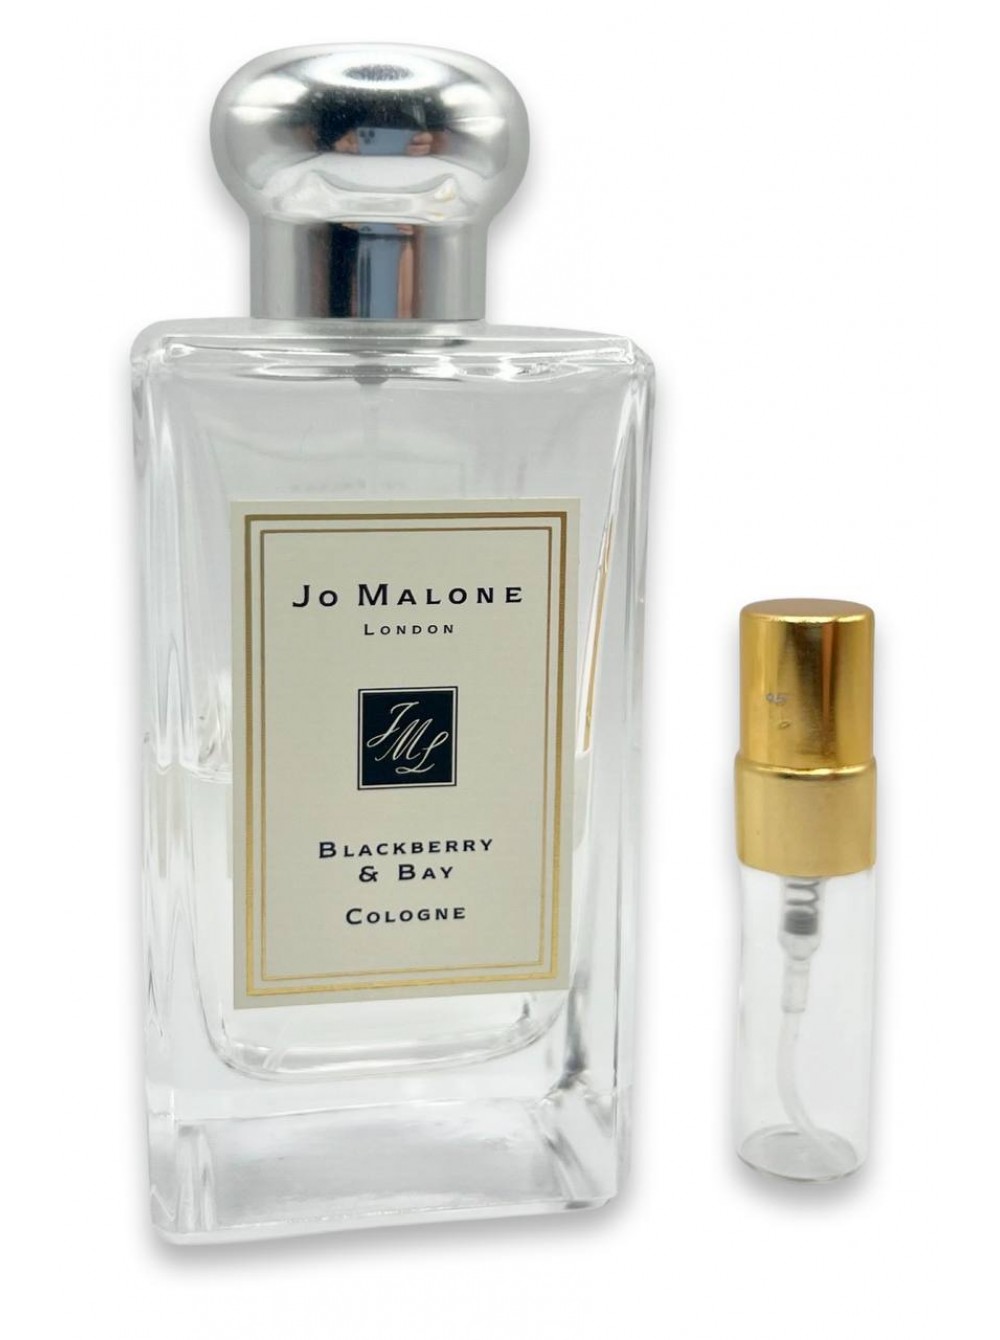 Bay　Цены　Купить　Malone　в　интернет-магазине　парфюмерии　Jo　Blackberry　мл　(распив)　Описание